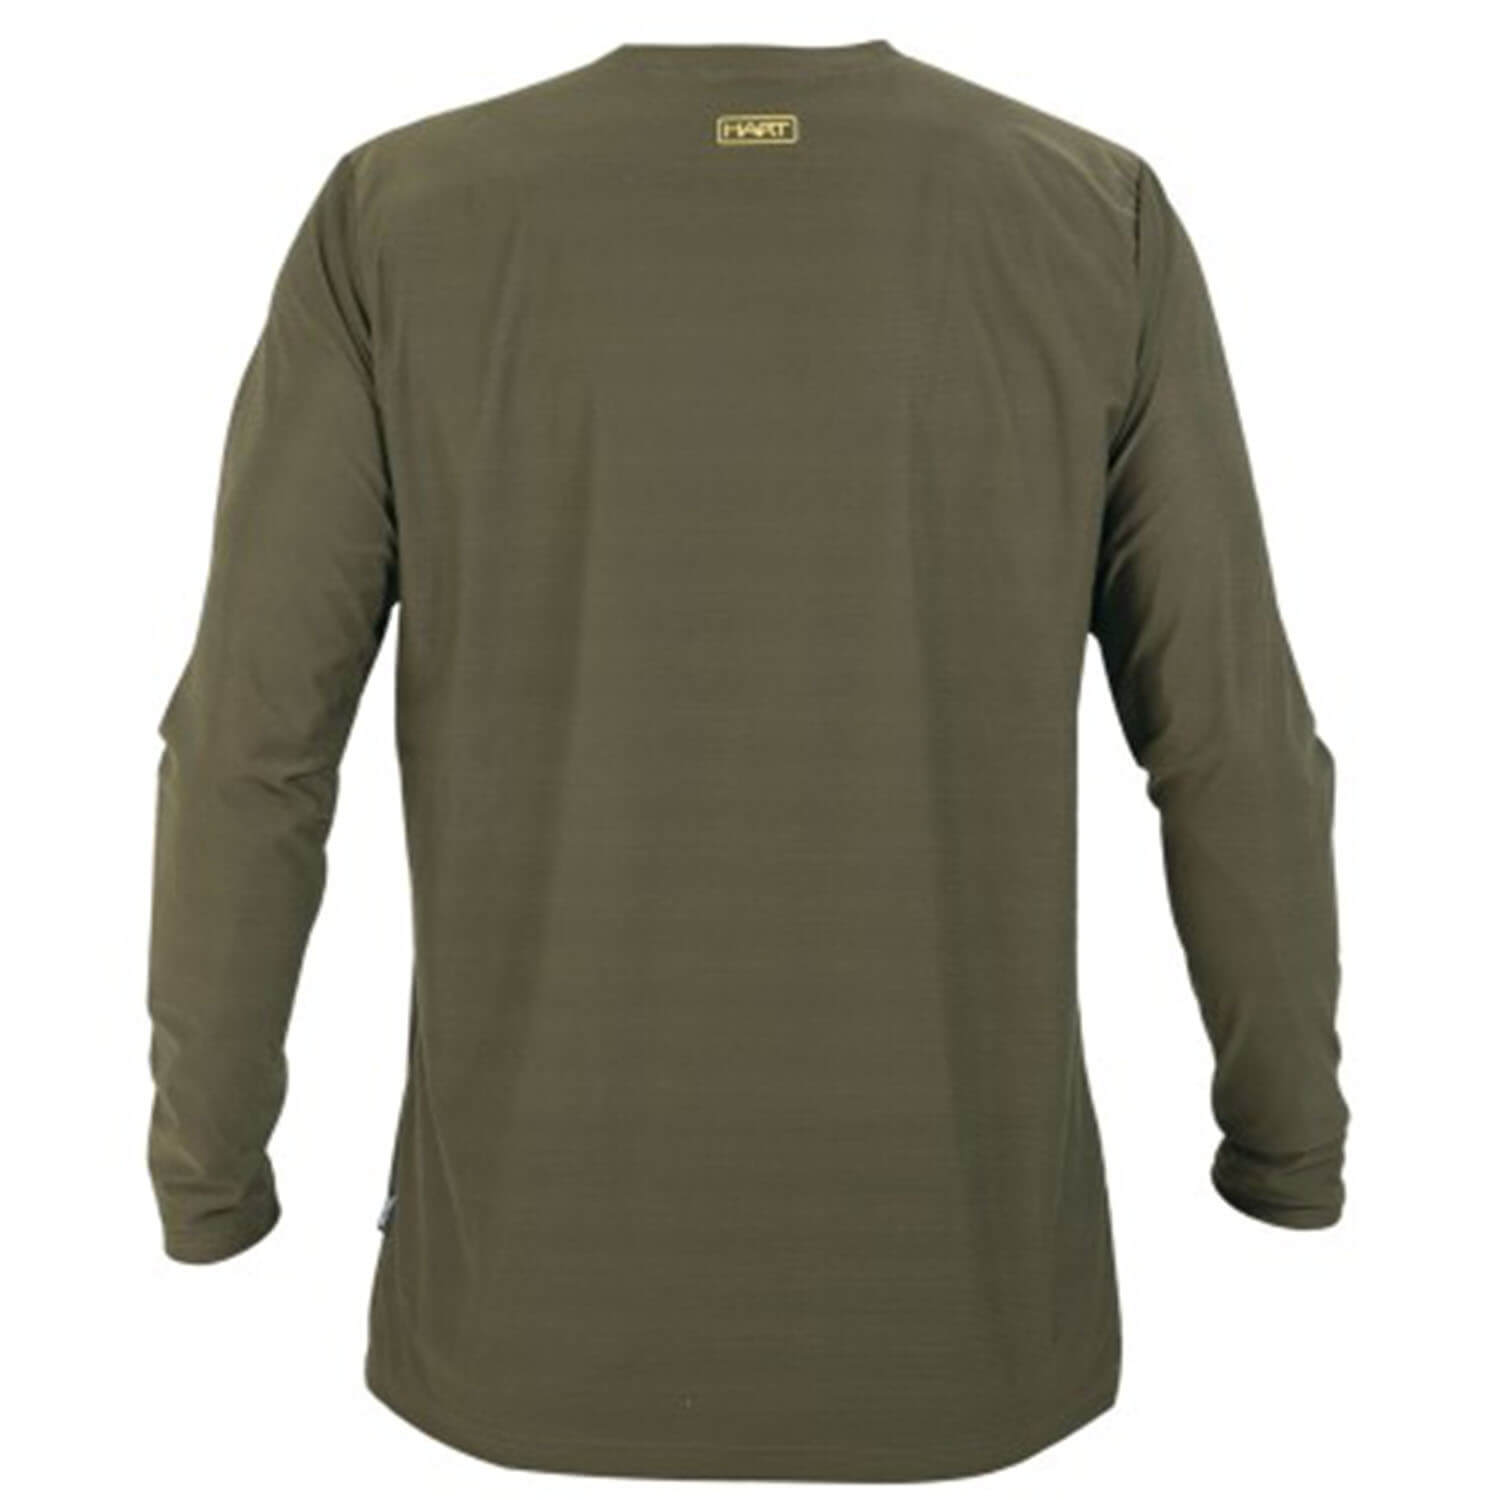  Hart Ural-TL long-sleeved shirt (green)